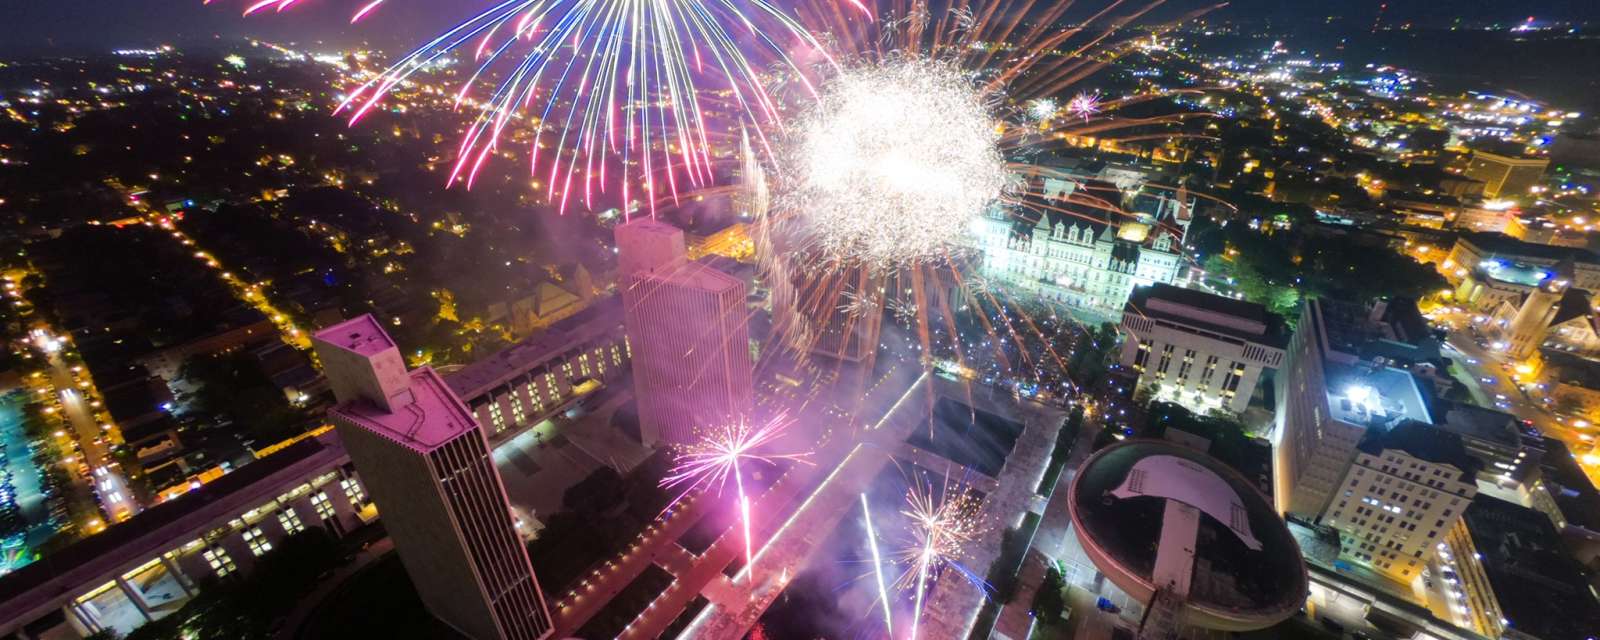 Empire State Plaza Fireworks